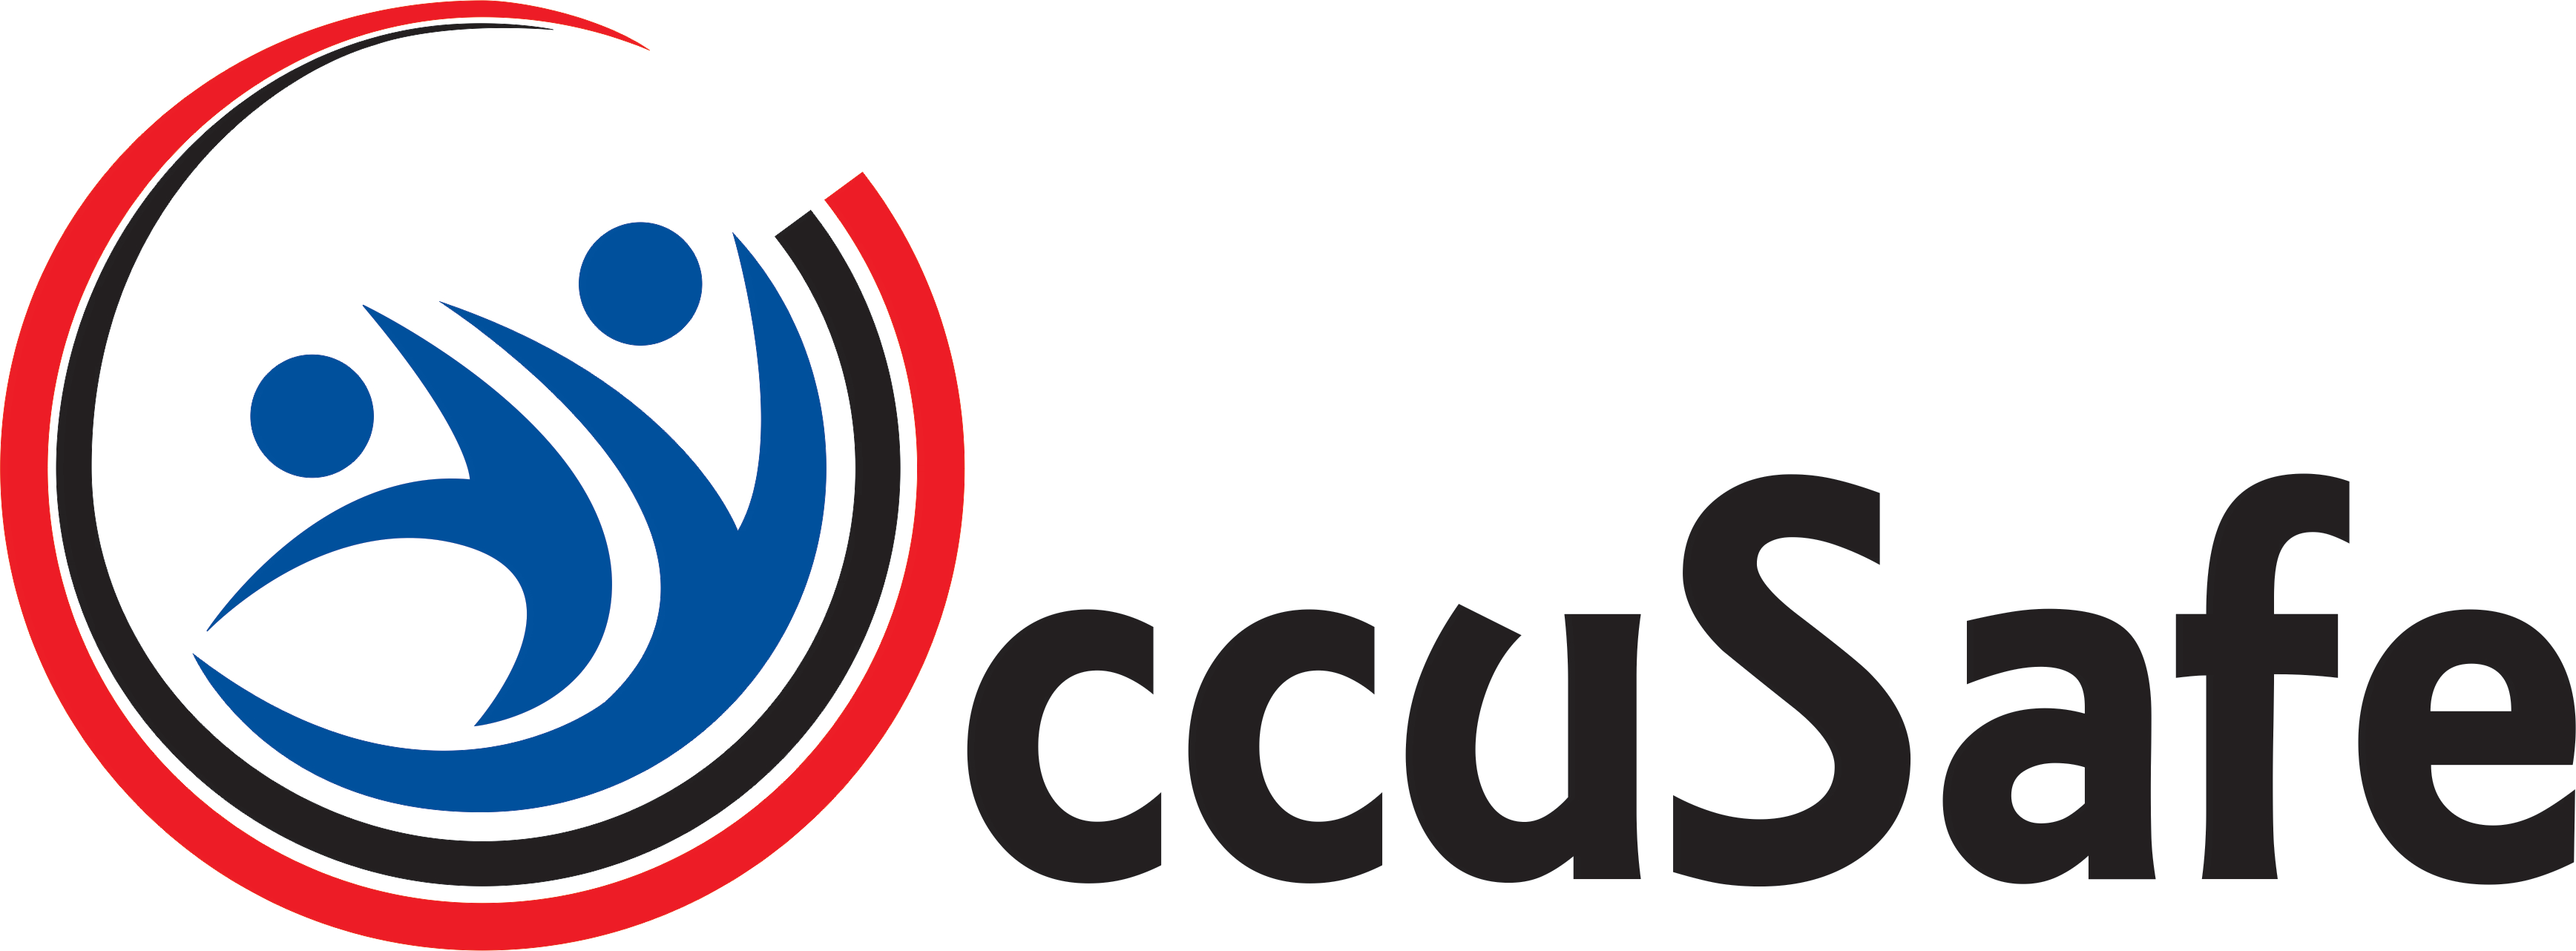 Occusafe (Pty)Ltd Logo